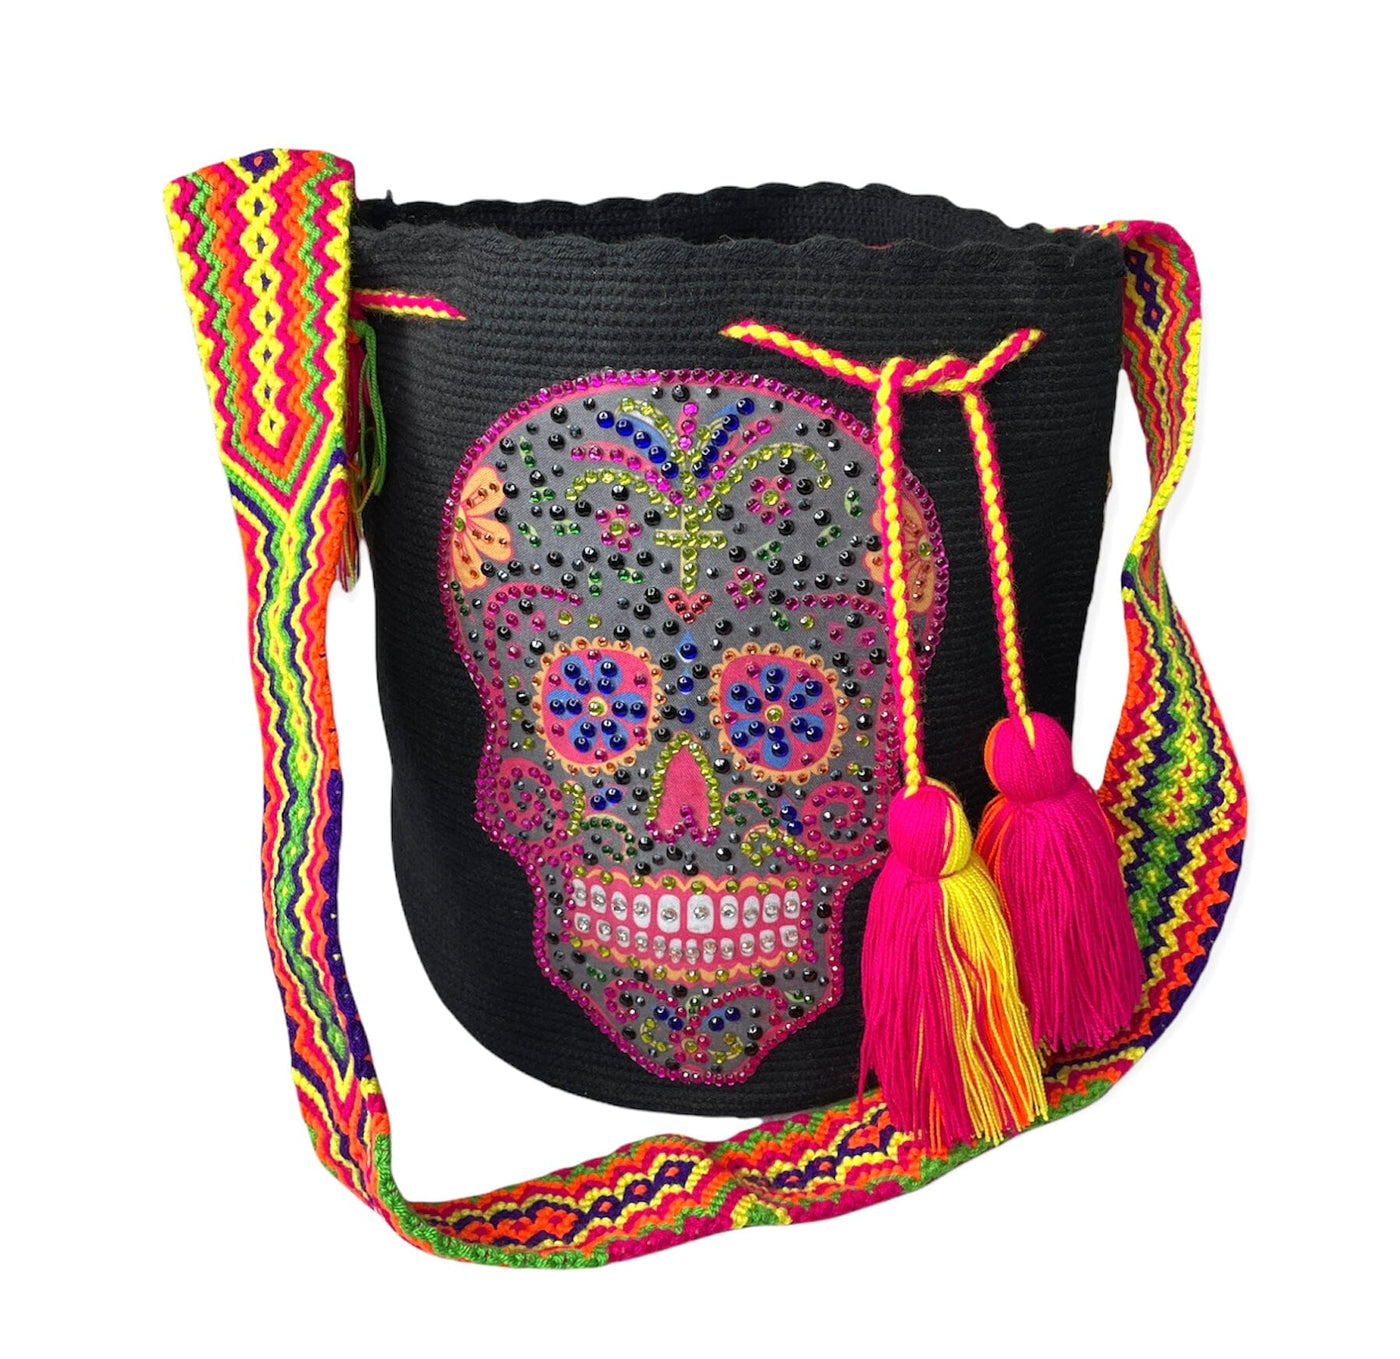 New Arrivals Crystal Embellished Crochet Bags Crossbody Crochet Boho Bag - Traditional Wayuu Design #36 Skull Large Black Crochet Bag (11"H x 9.5"W) 